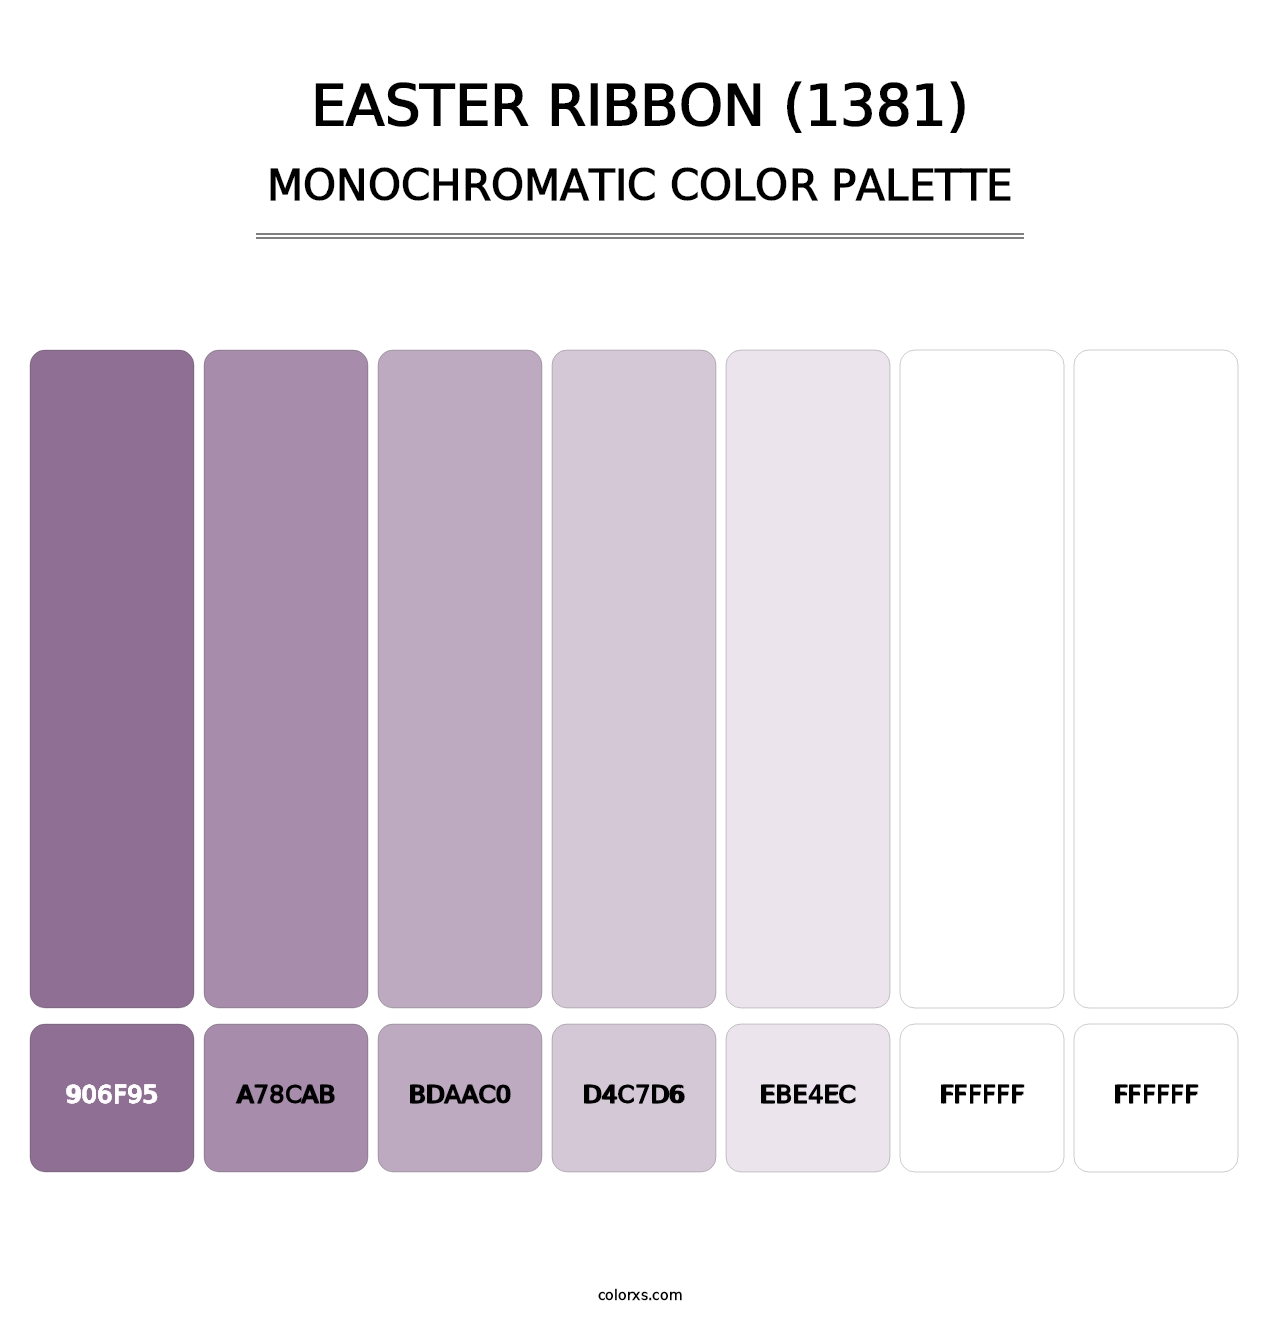 Easter Ribbon (1381) - Monochromatic Color Palette